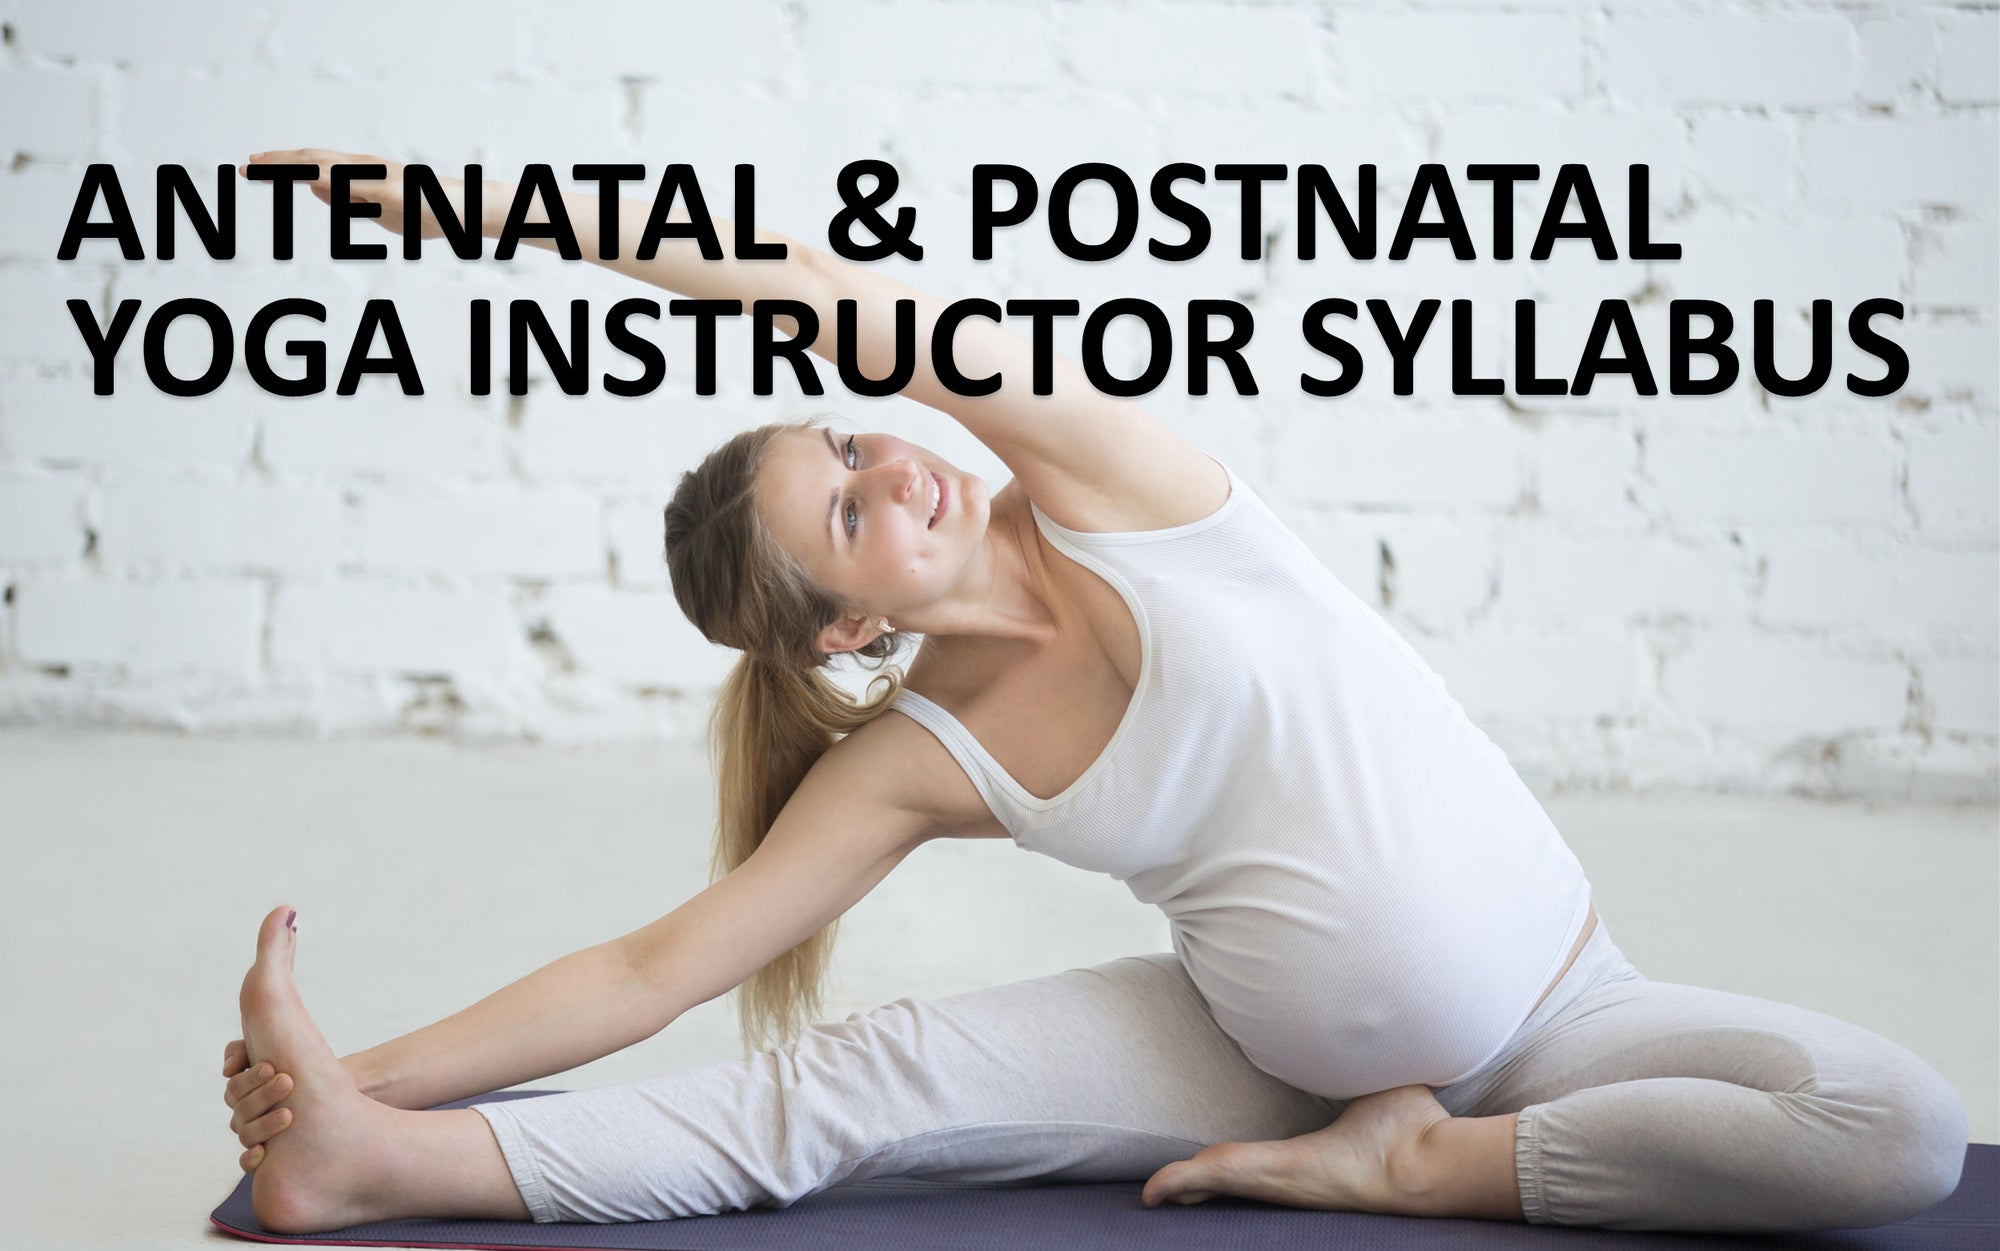 Antenatal and Postnatal Yoga Instructor Syllabus